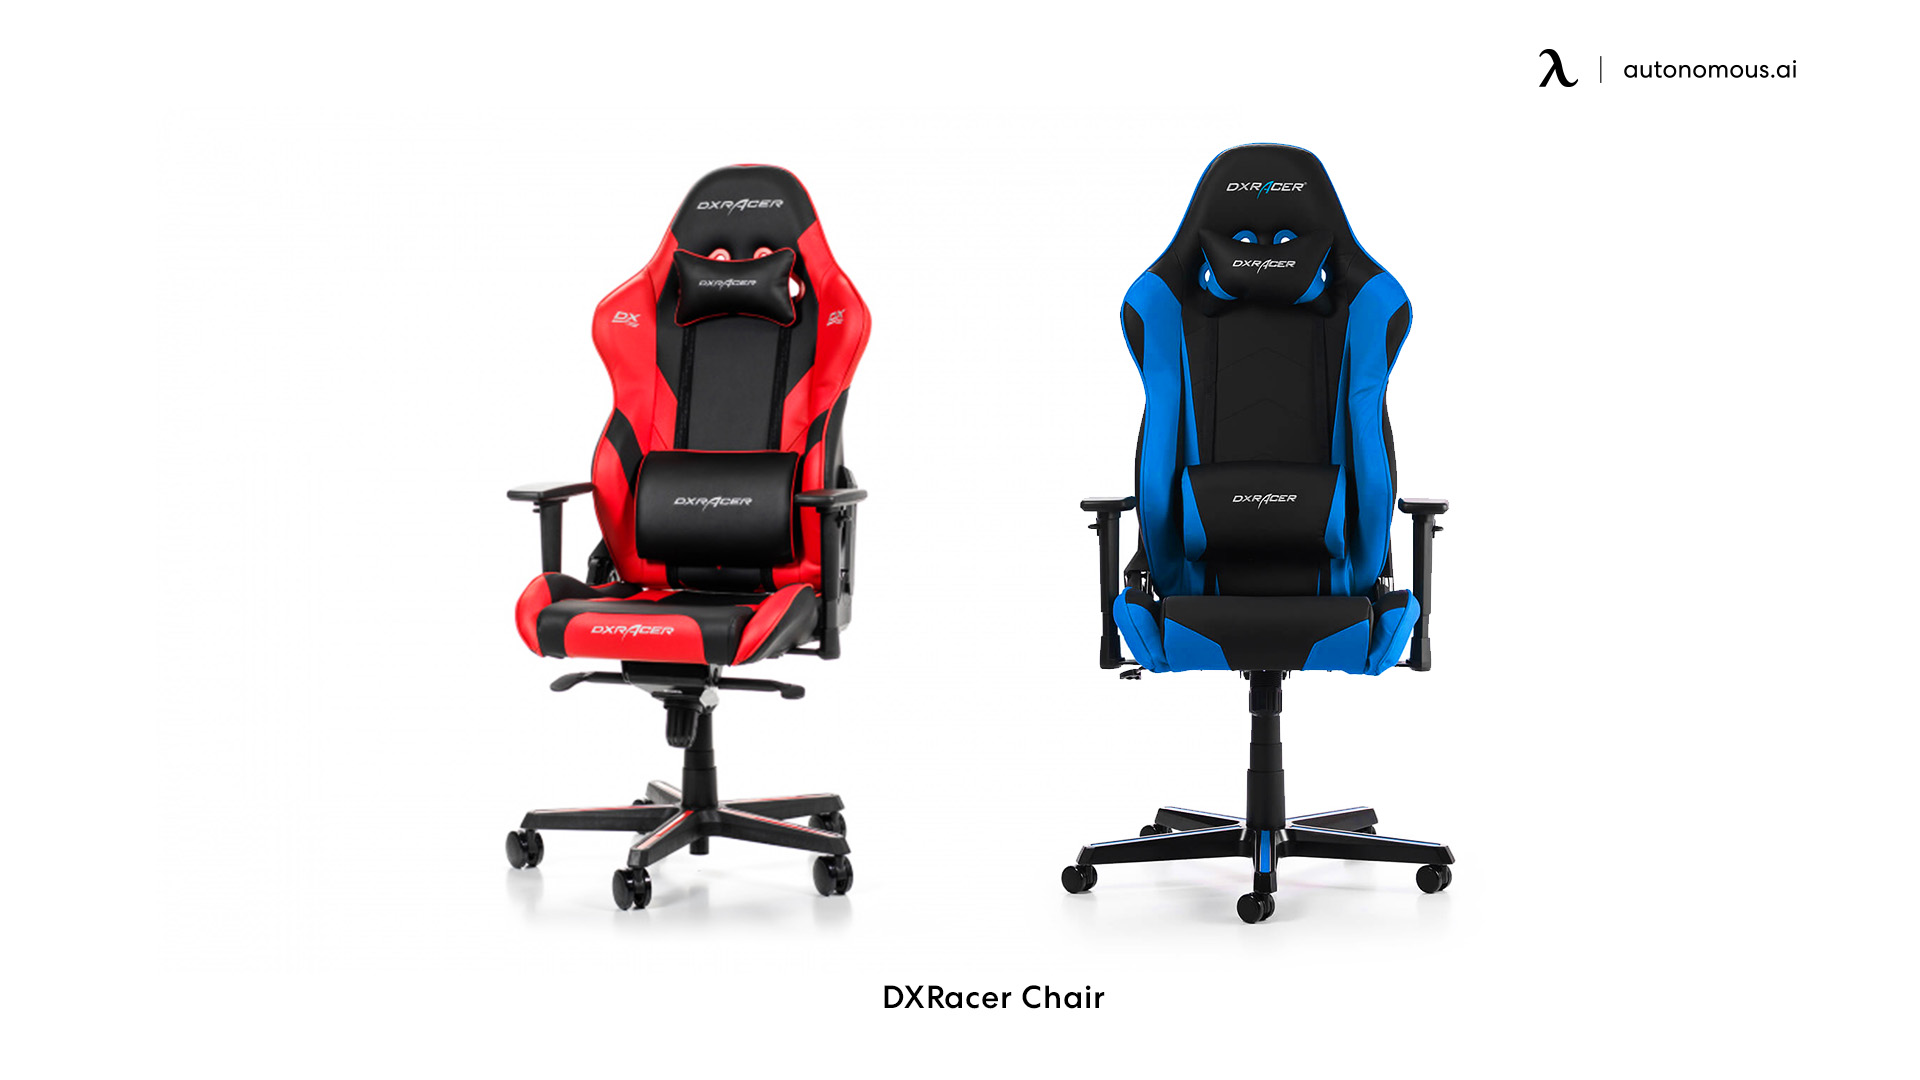 DXRacer Formula comfortable gaming chair